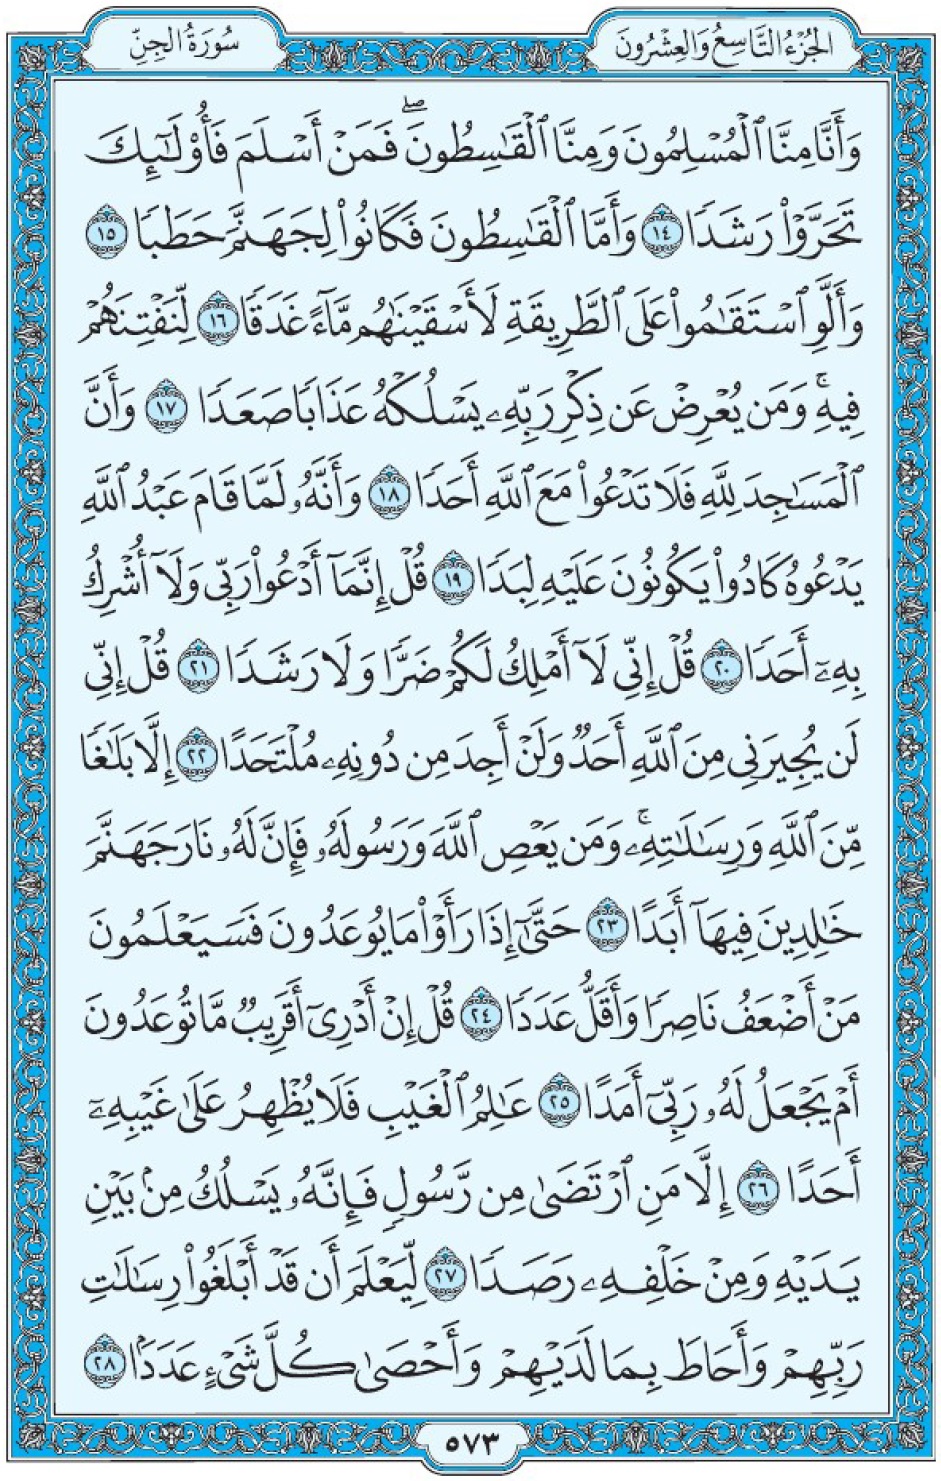 Коран Мединский мусхаф страница 573, сура аль-Джинн, аят 14-28